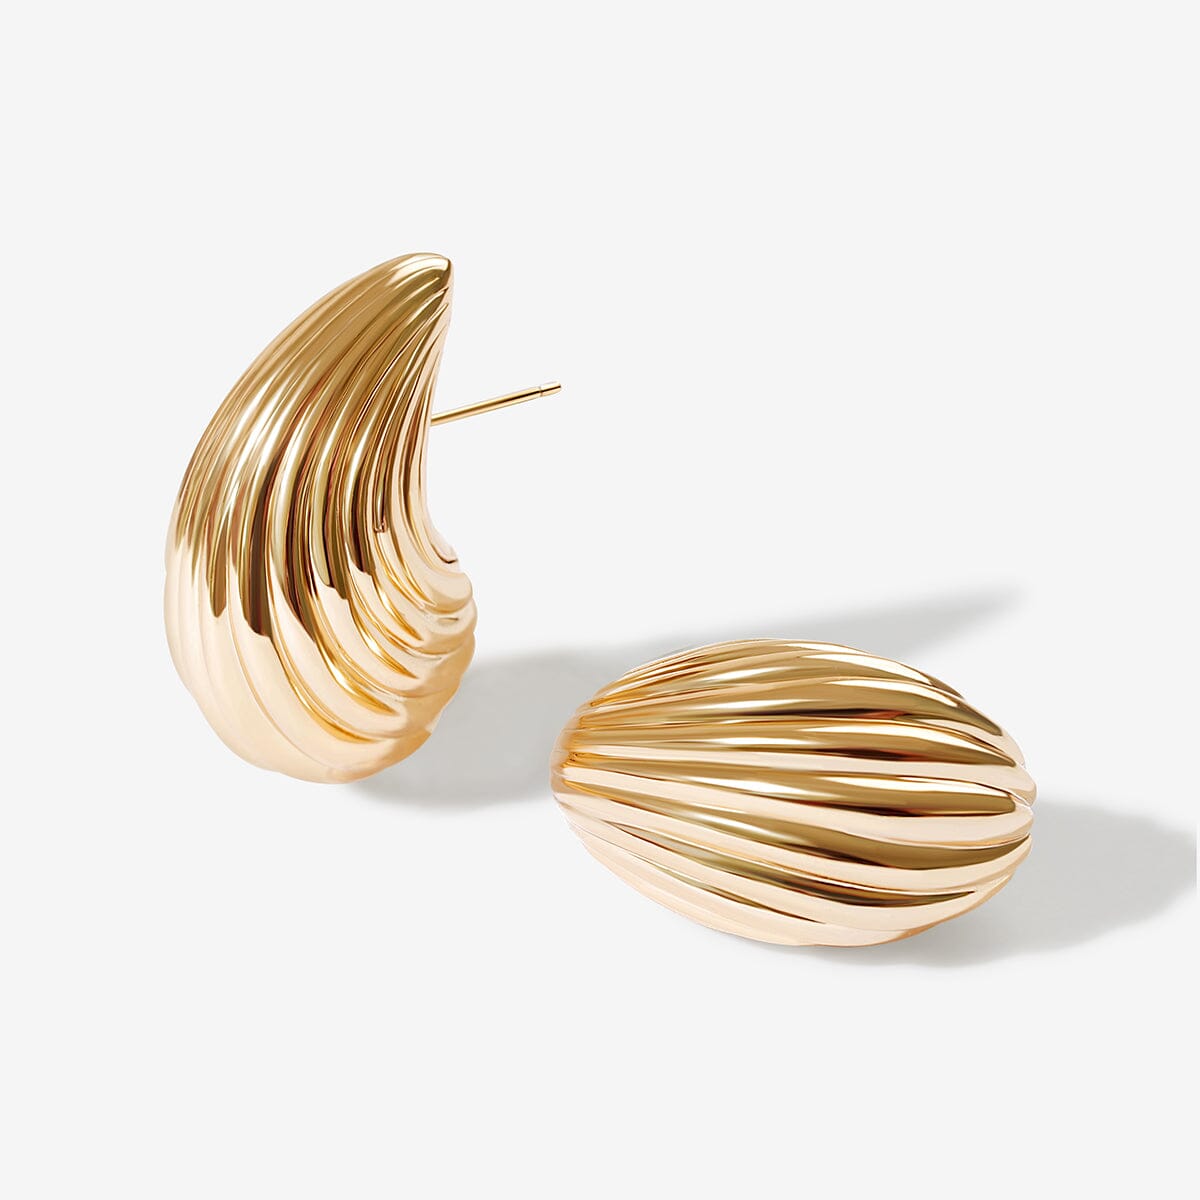 Share 200+ gold shell earrings latest